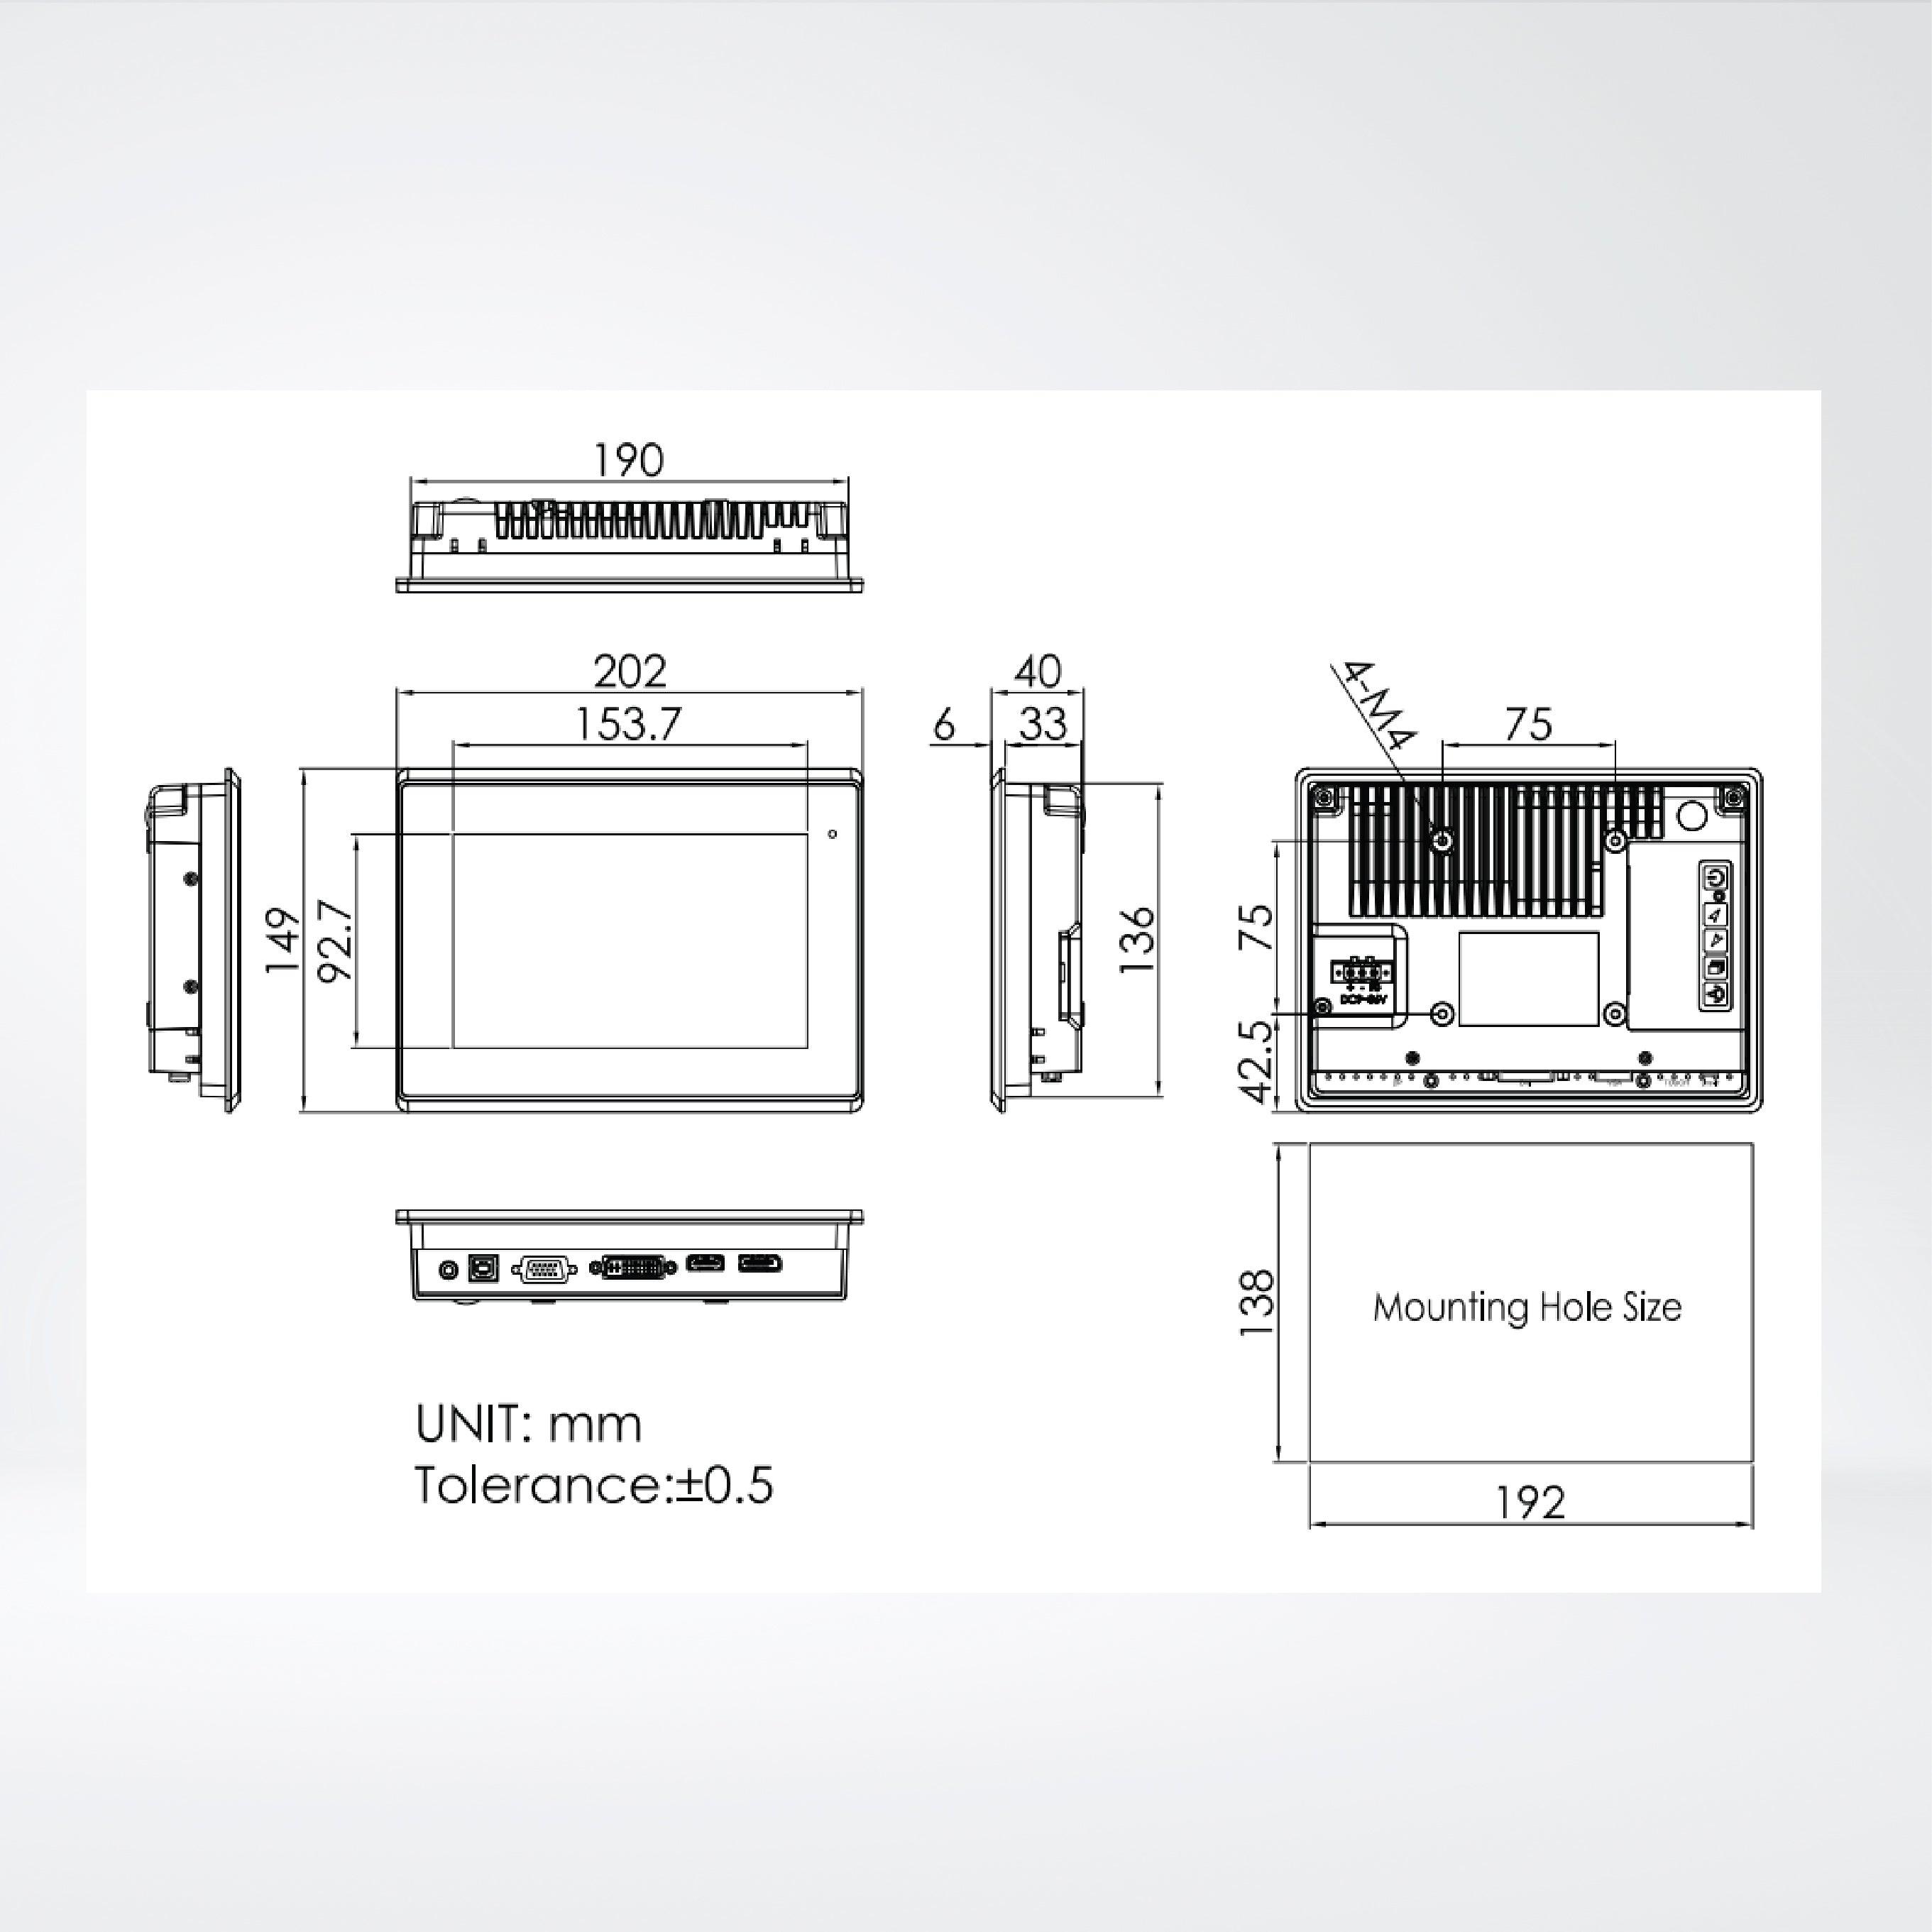 ARCDIS-107APR(H) 7” Front Panel IP66 Aluminum Die-casting Display - Riverplus